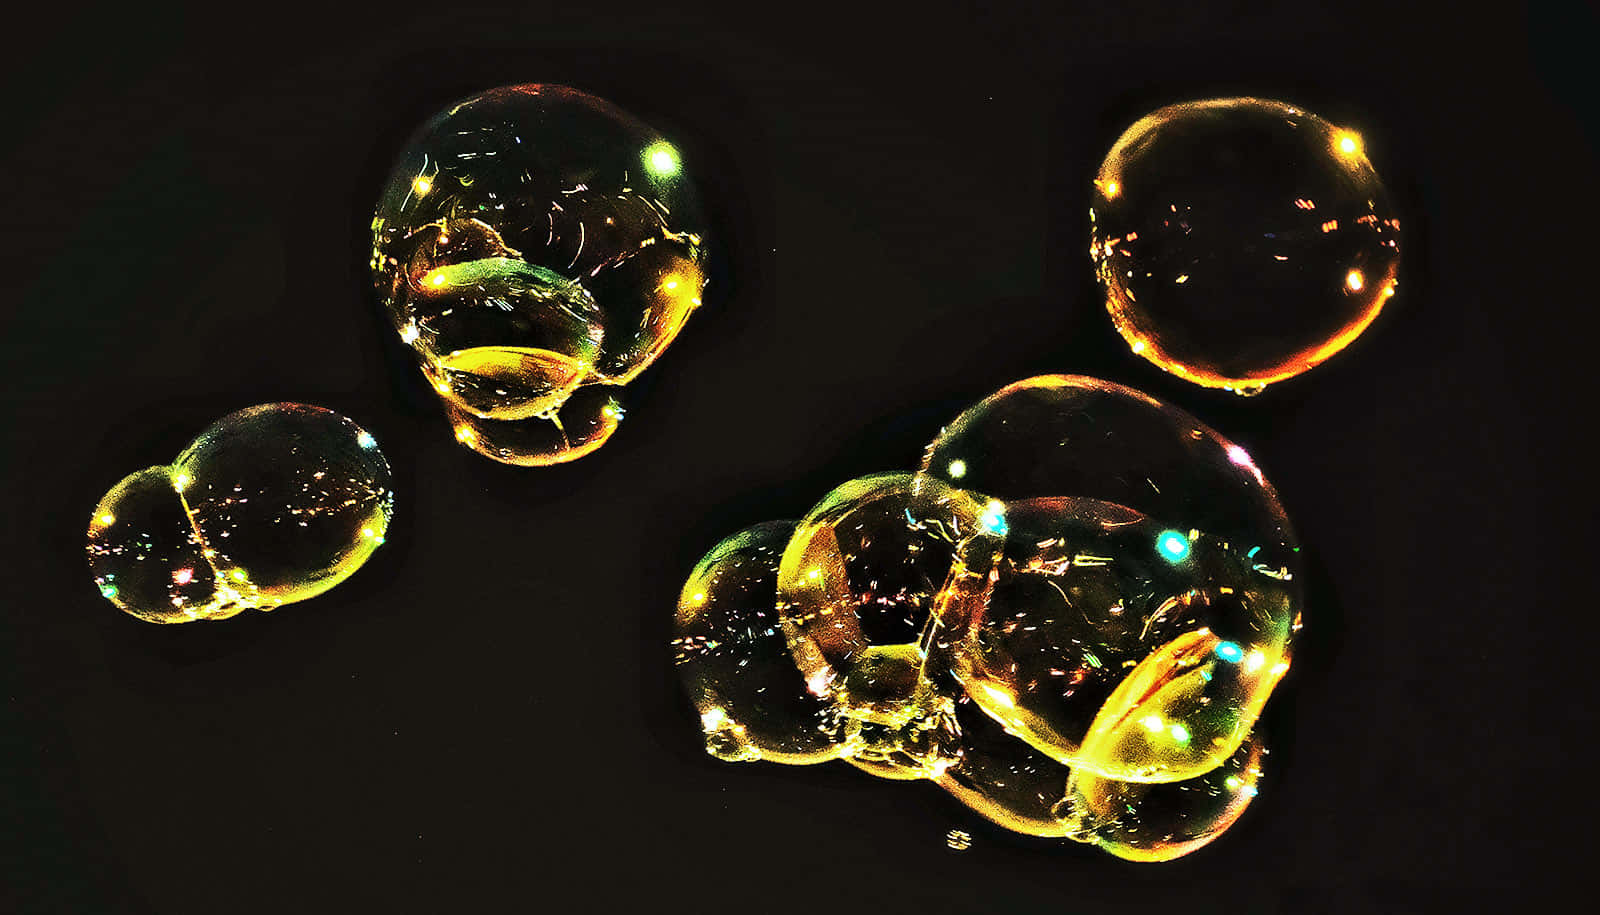 Enjoy the beauty of bubbles